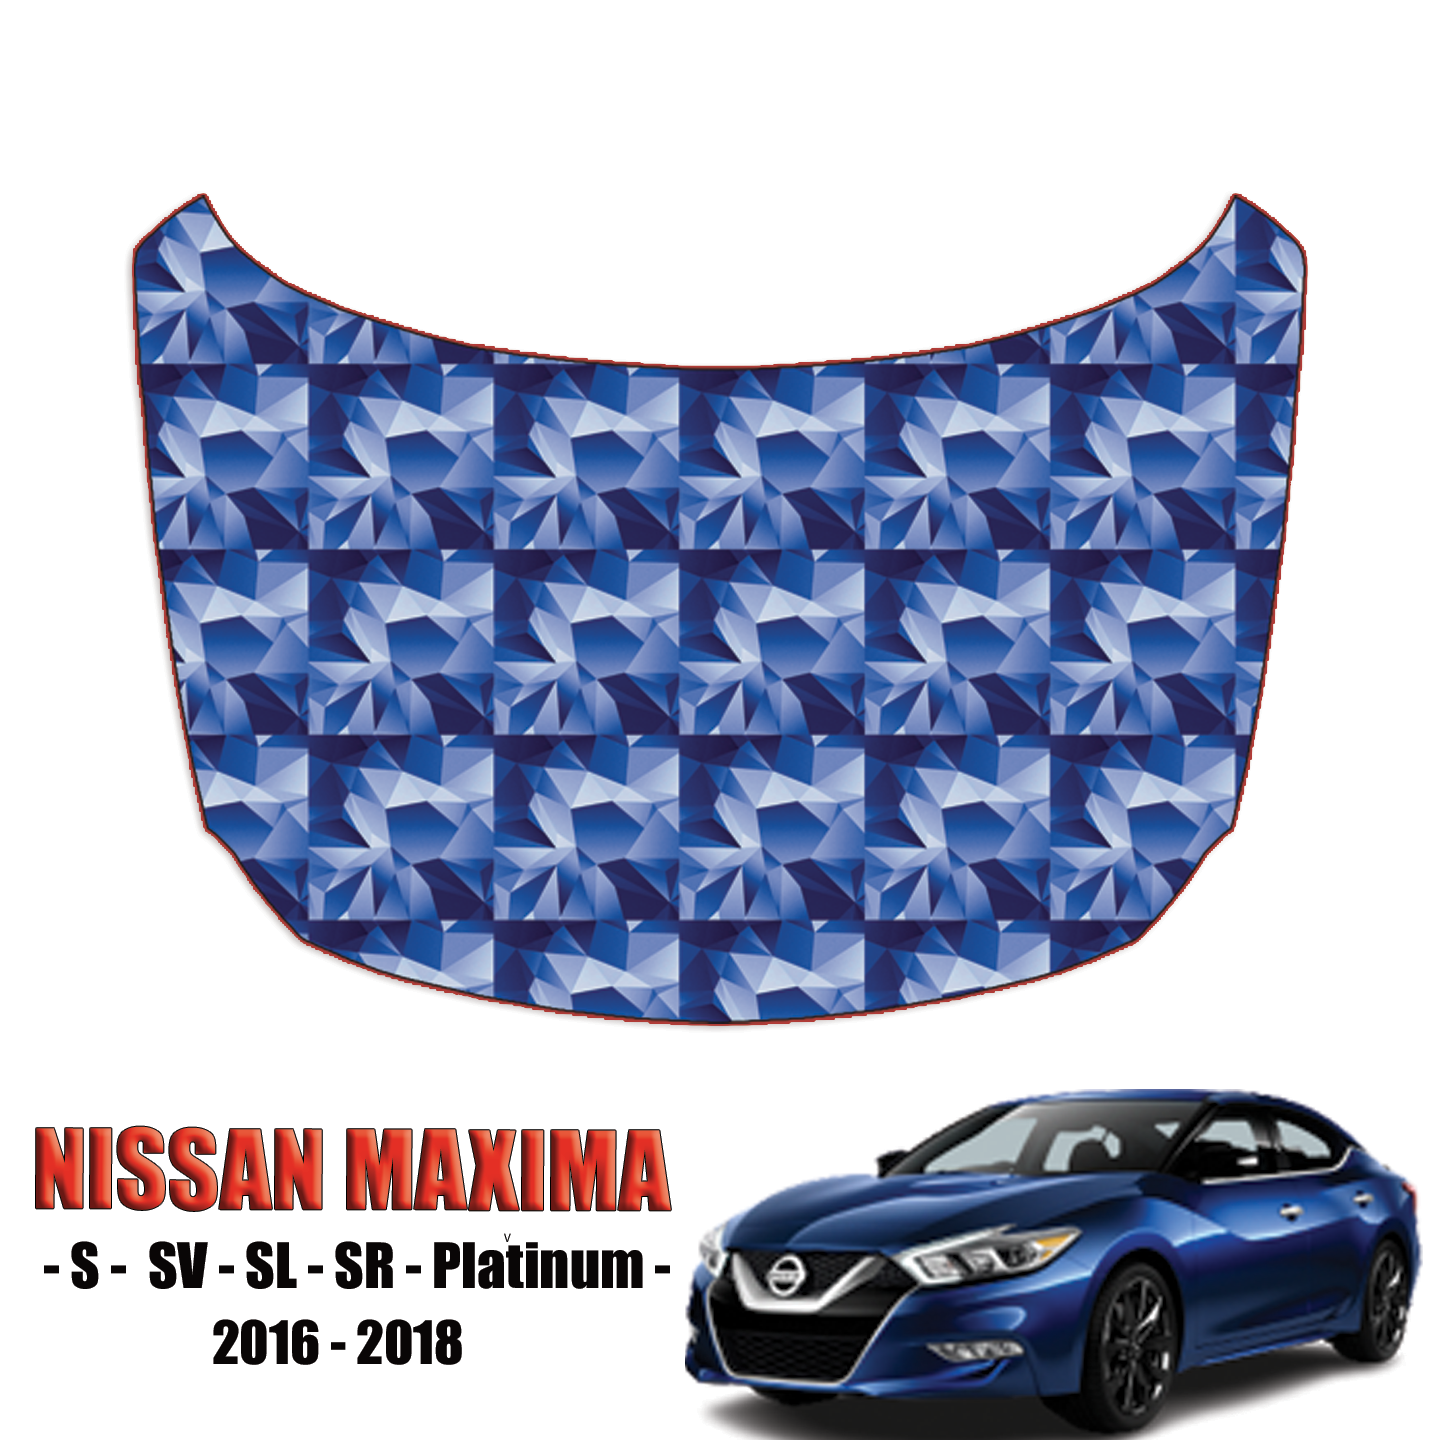 2016-2018 Nissan Maxima – S, SV, SL, SR, Platinum Precut Paint Protection Film – Full Hood